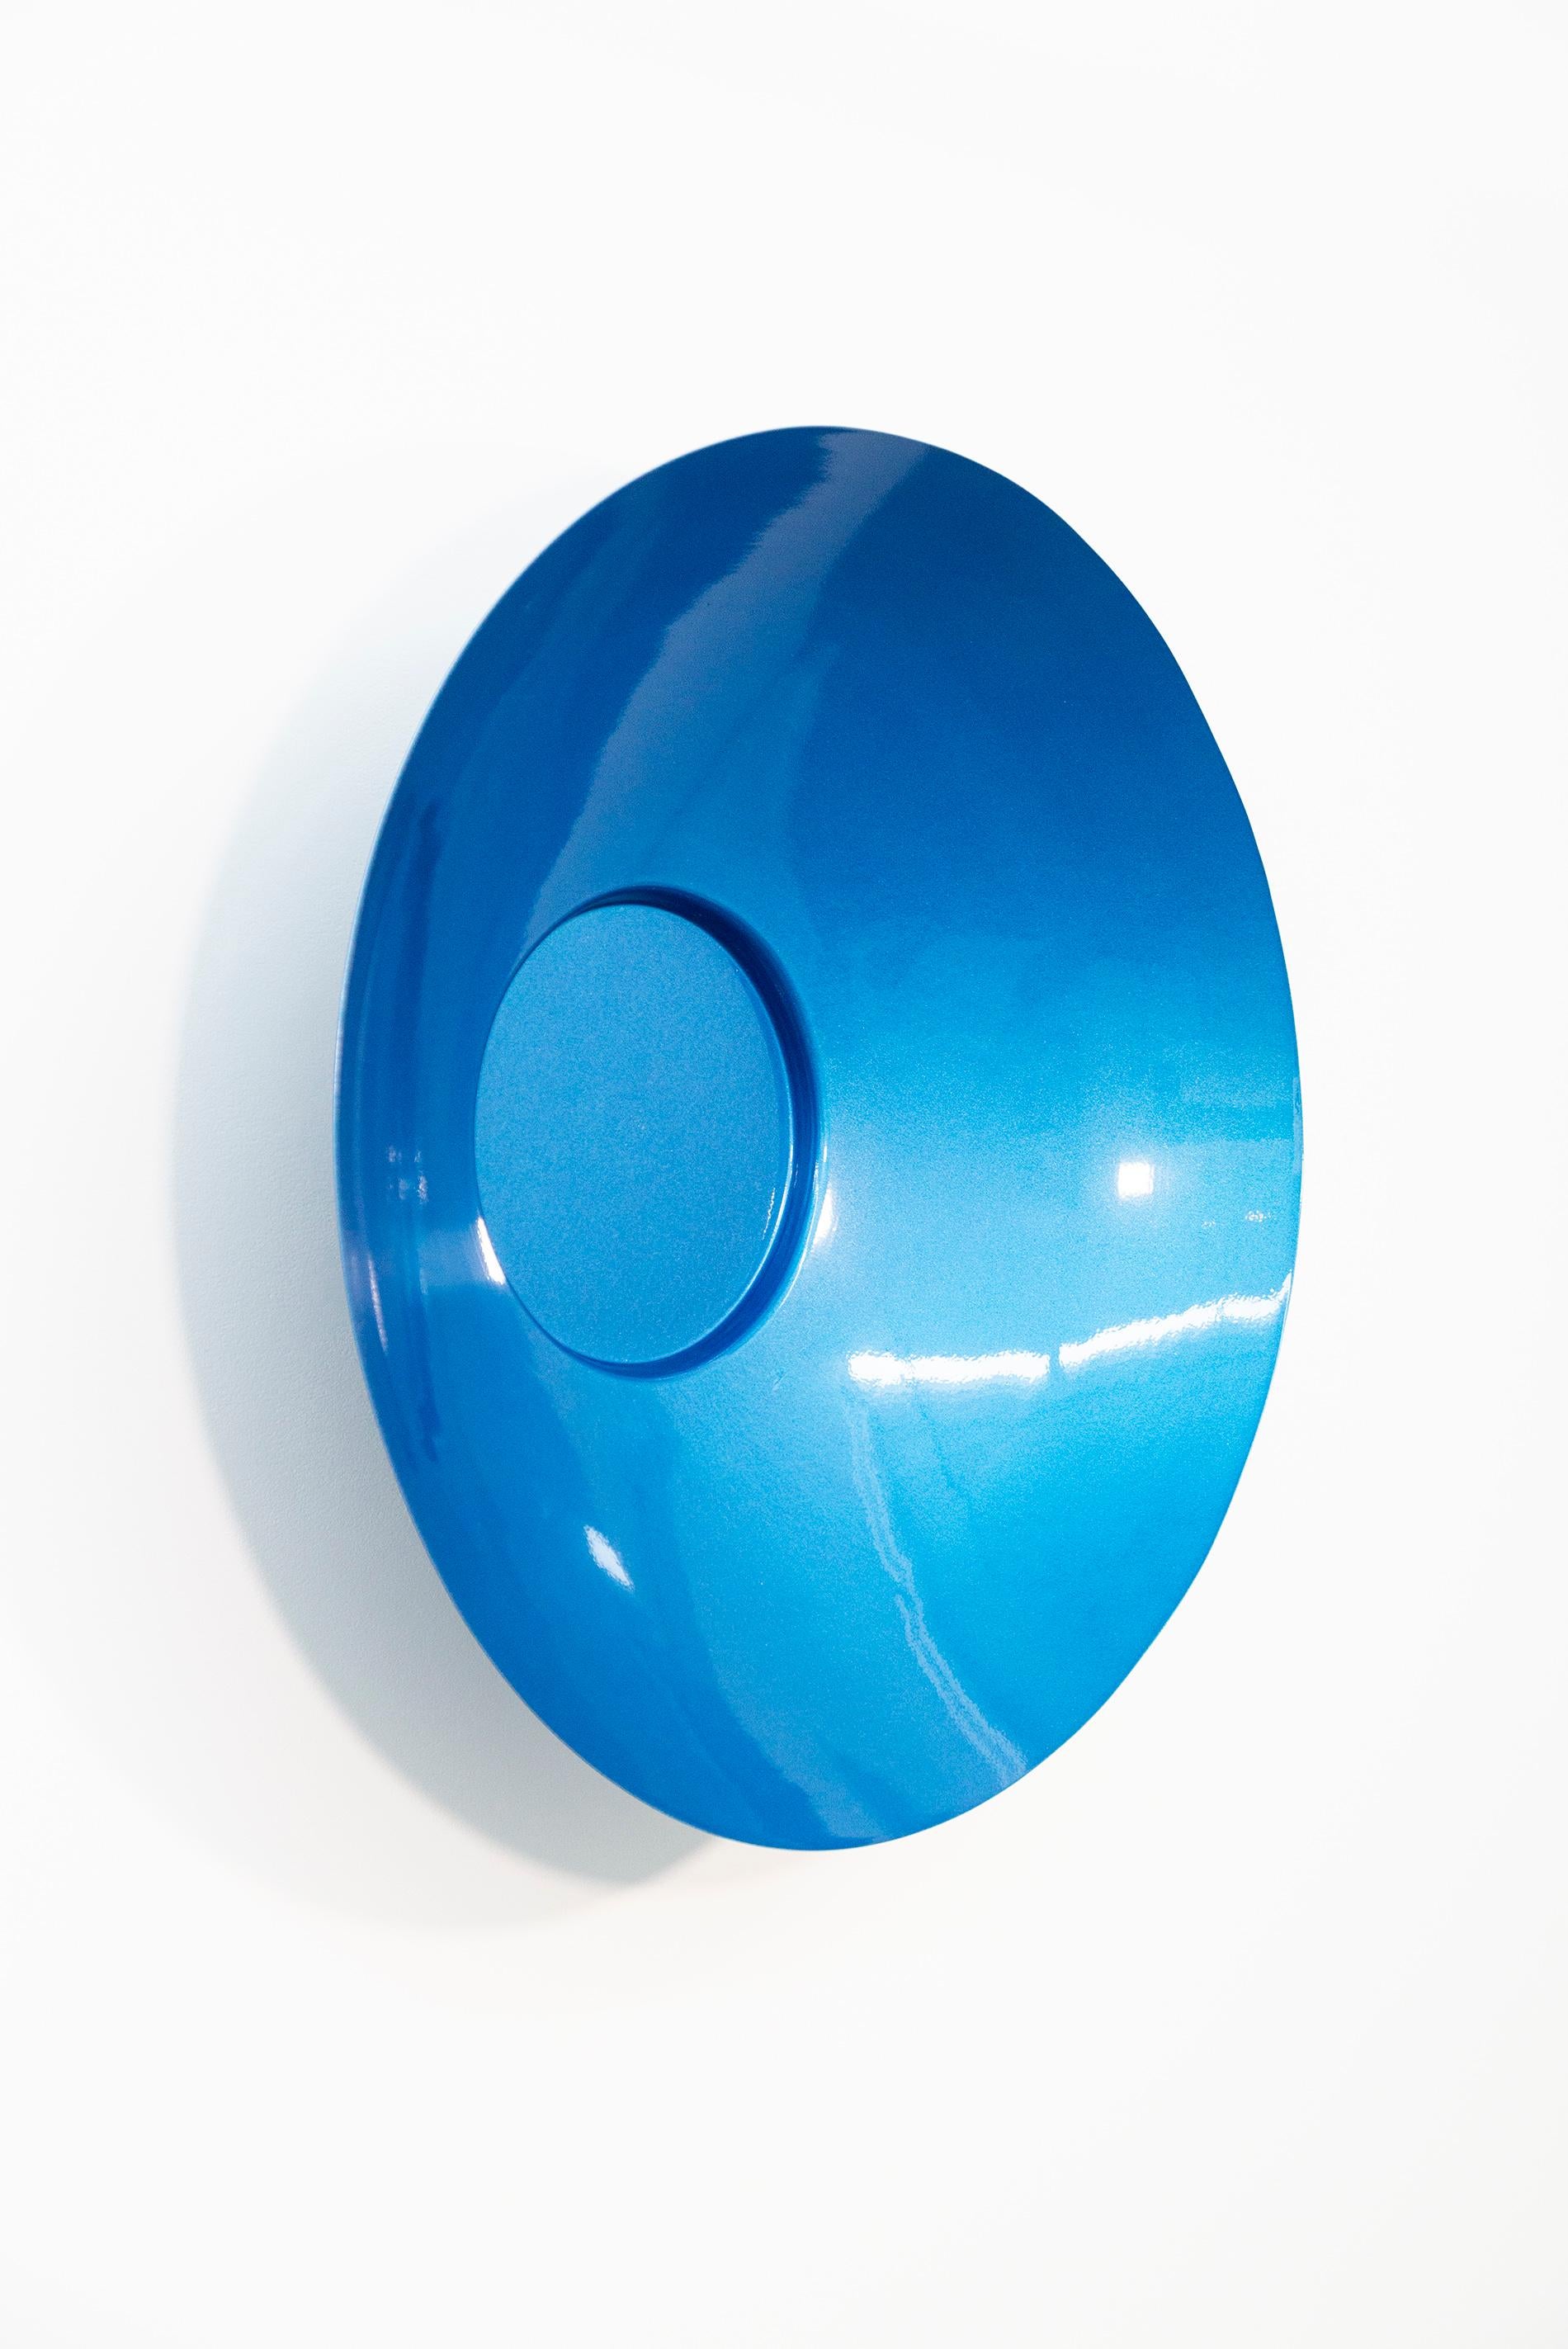 Singing Vessel Atlantic Blue 32 - circular, contemporary, steel wall sculpture For Sale 2